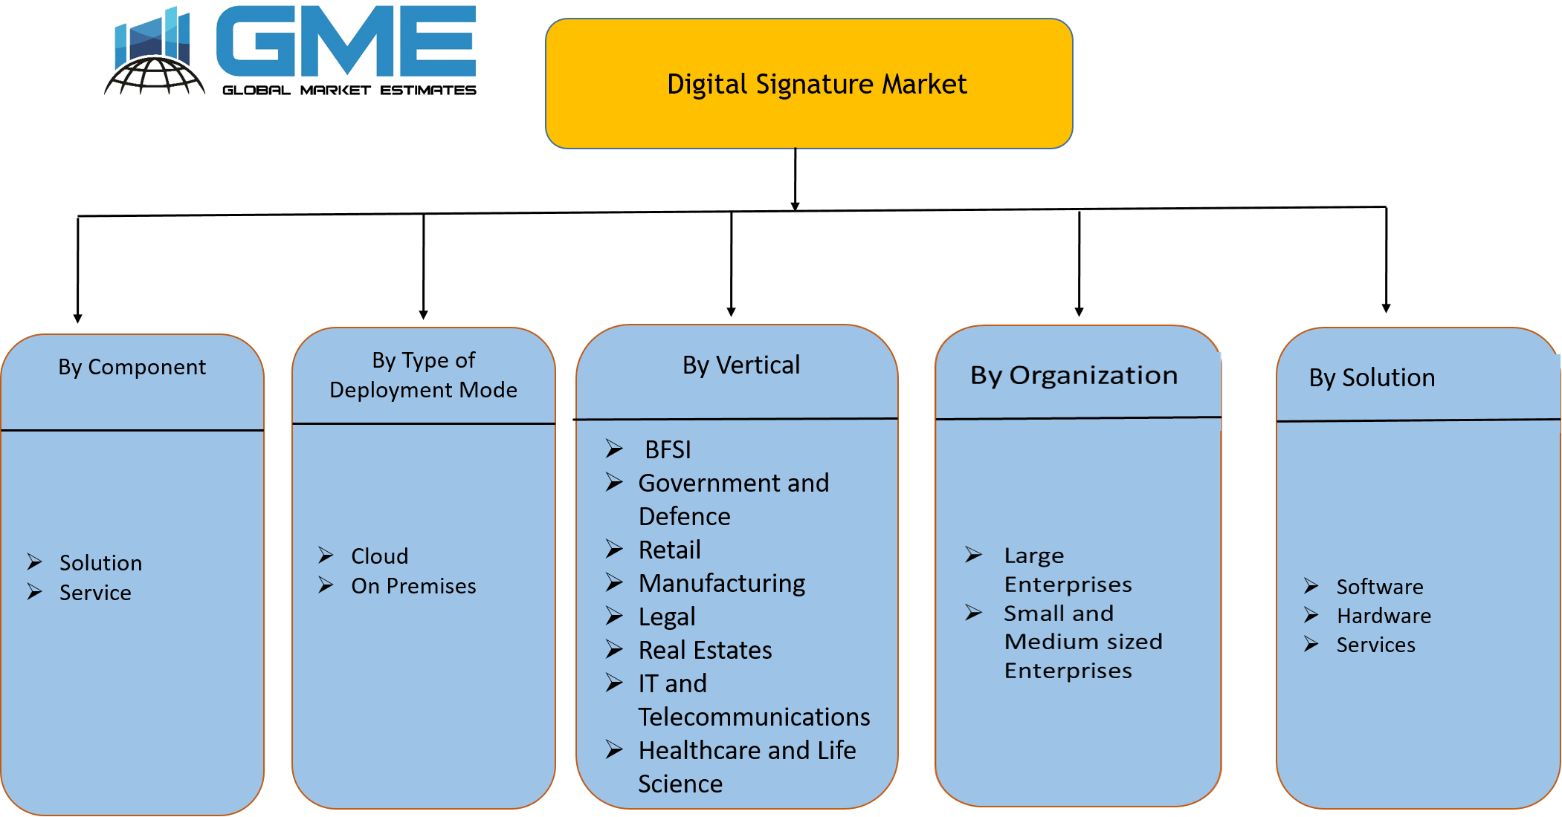 Digital Signature Market Segmentation